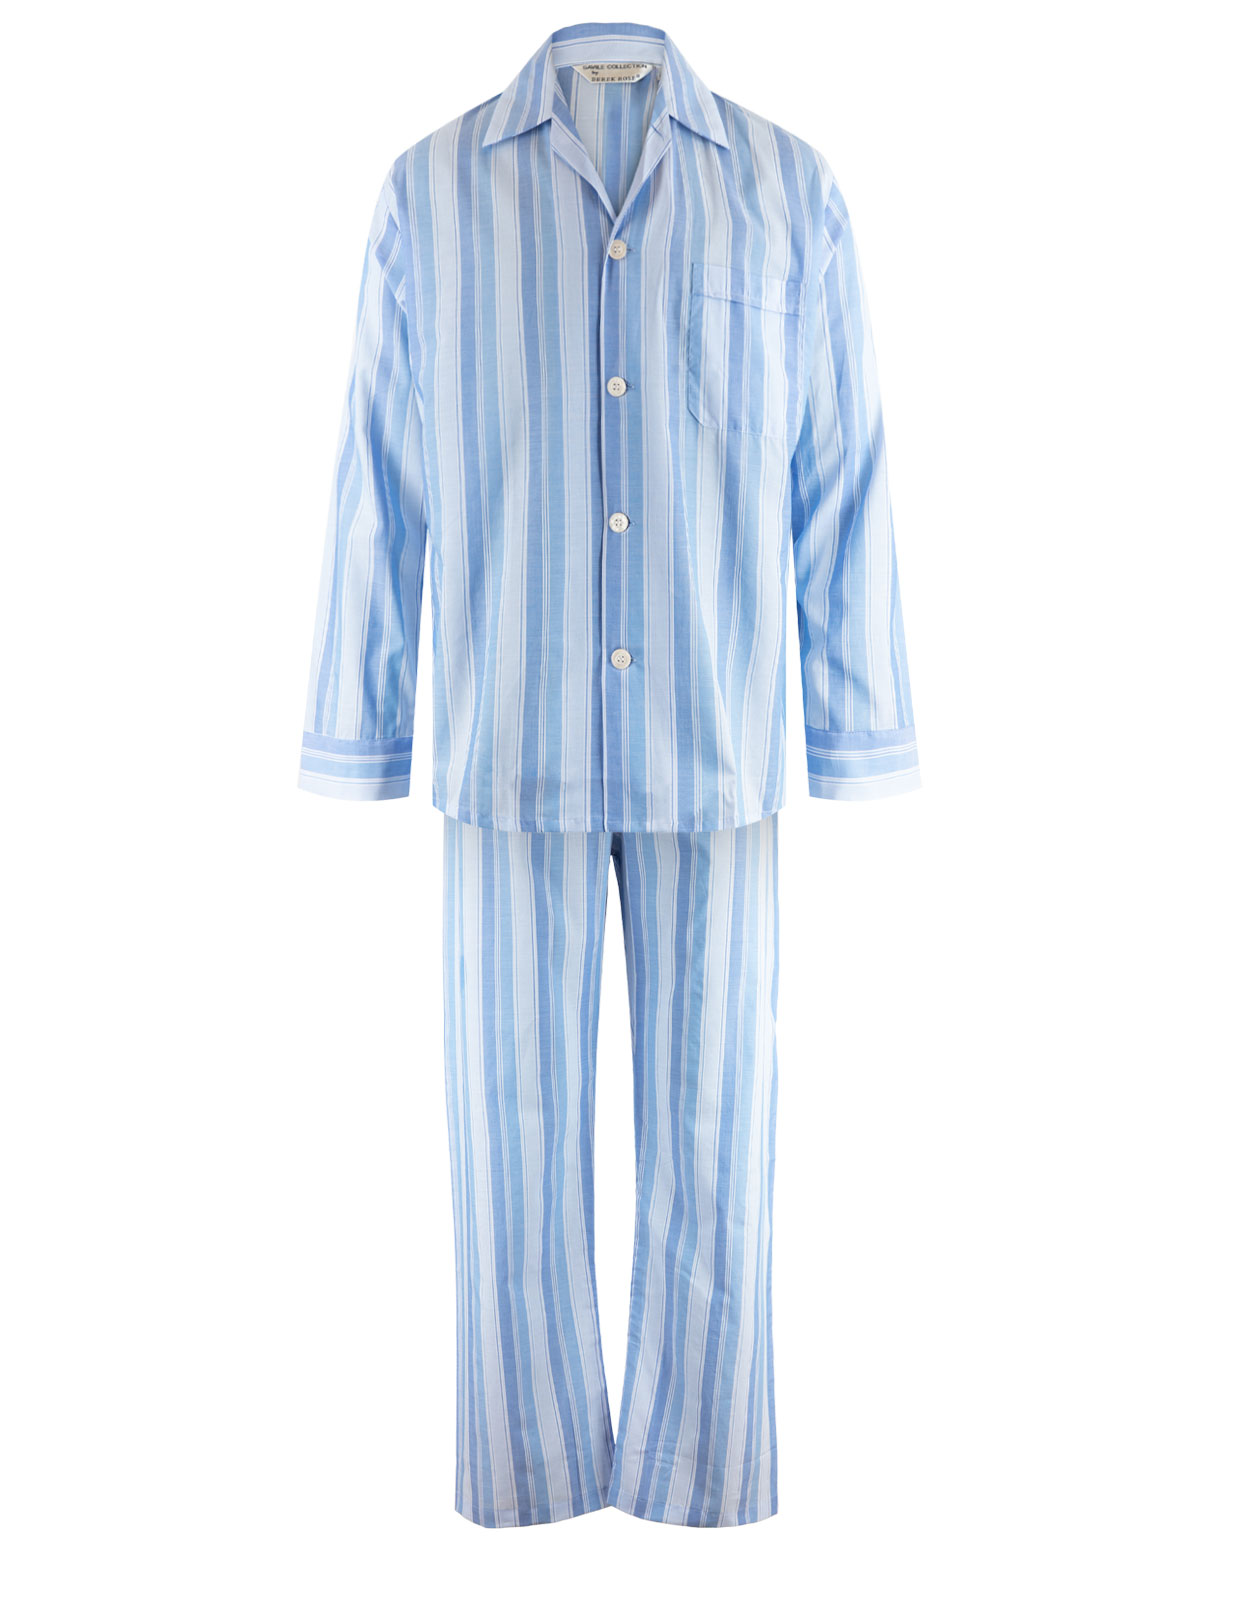 Saville Pyjamas Blå / Vit Stl 54